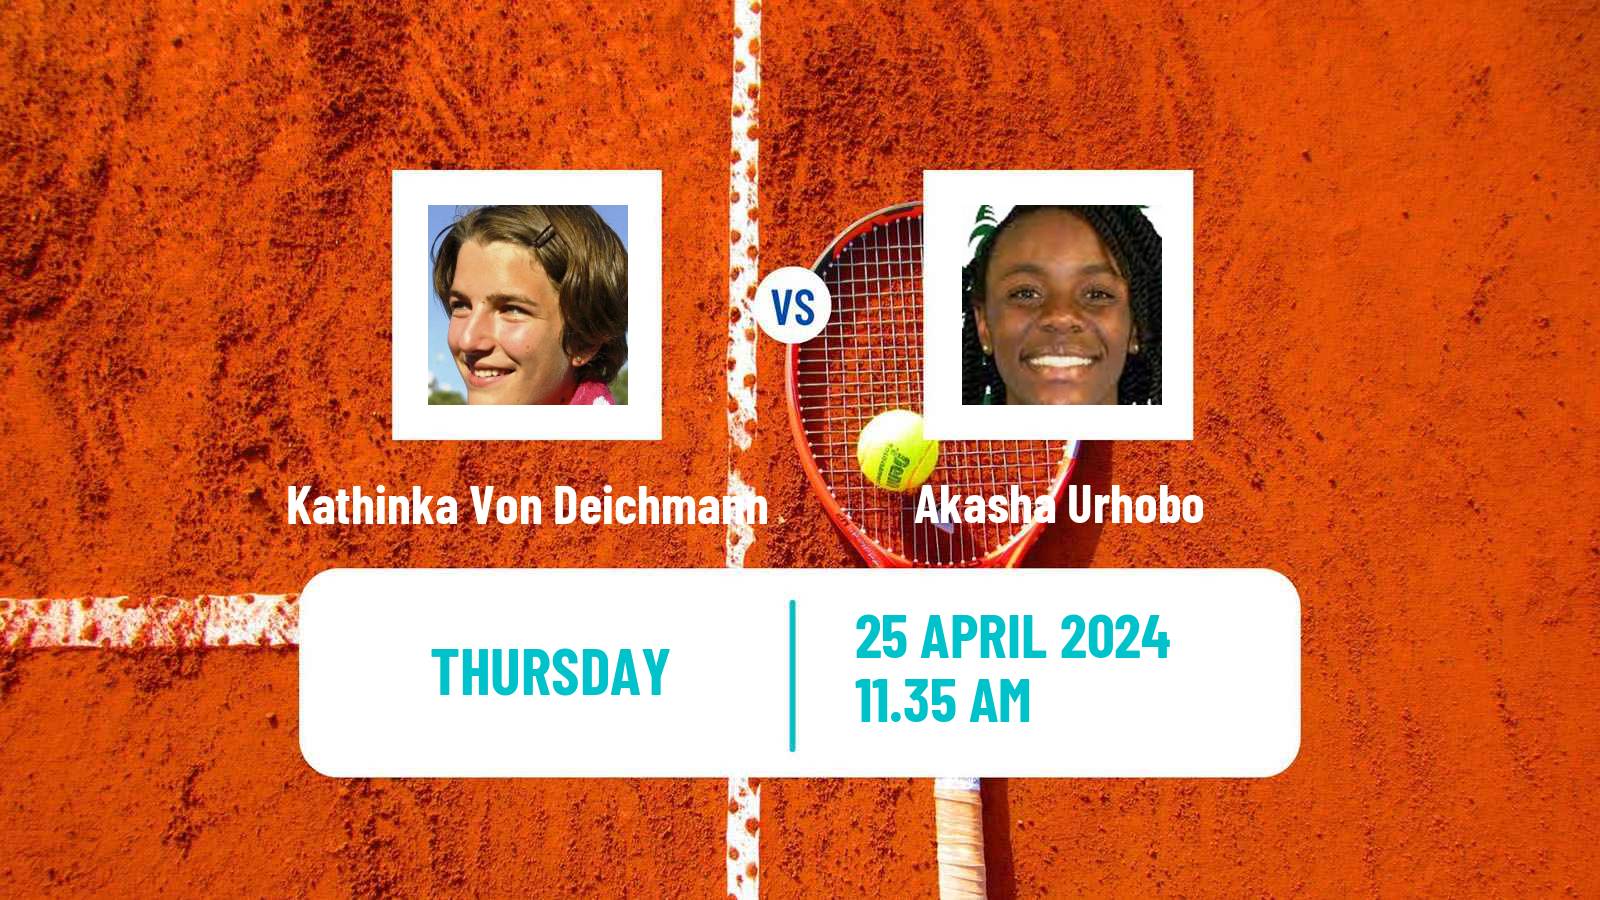 Tennis ITF W75 Charlottesville Va Women Kathinka Von Deichmann - Akasha Urhobo